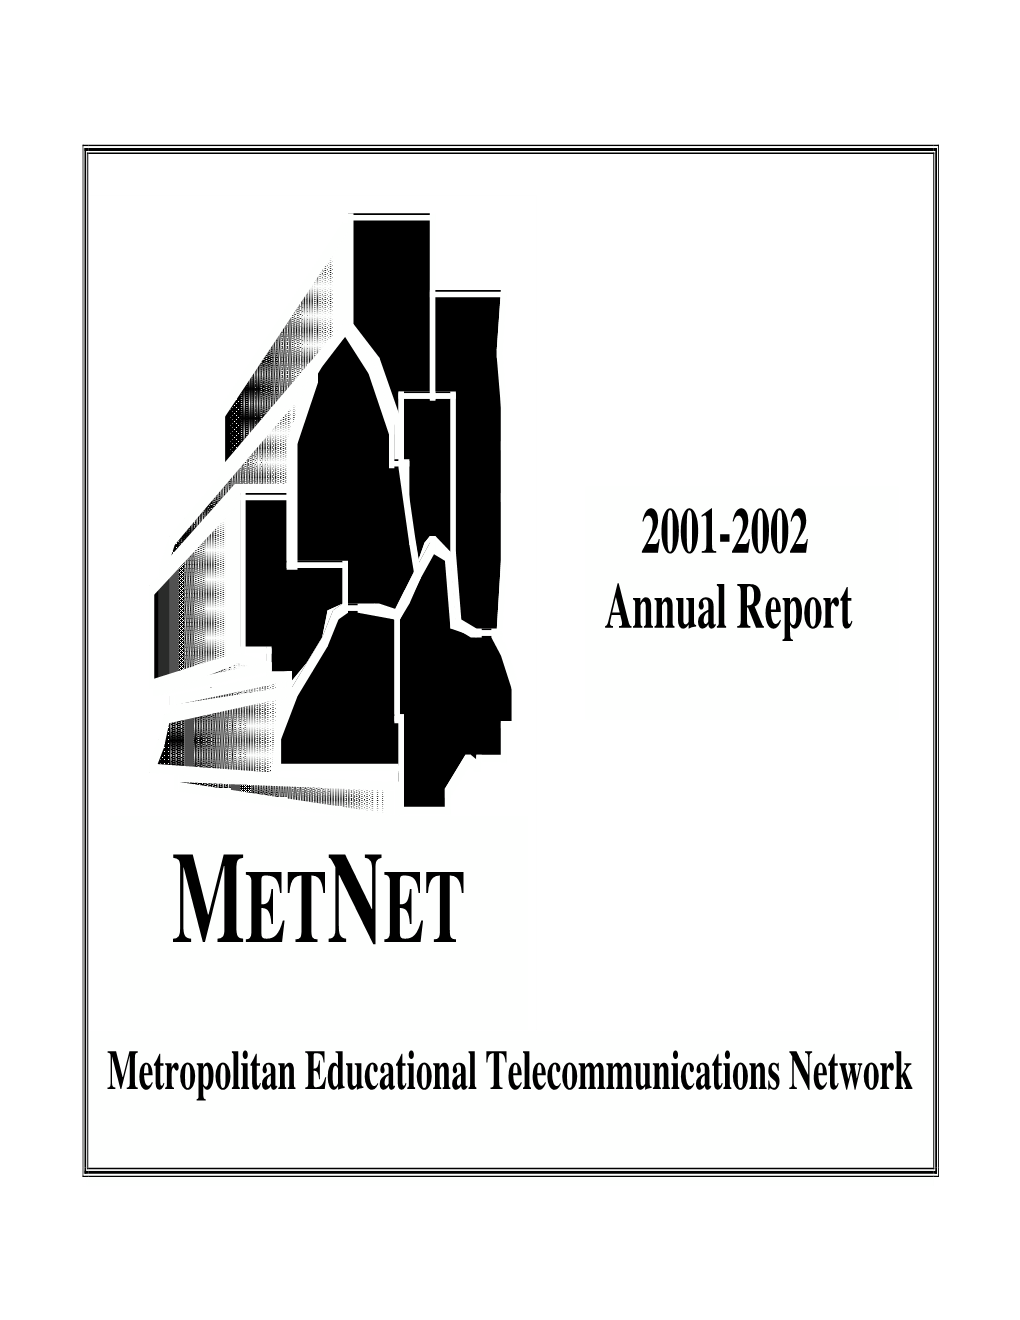 8 METNET ITV Course Comparison 1995/96 - 2001/02